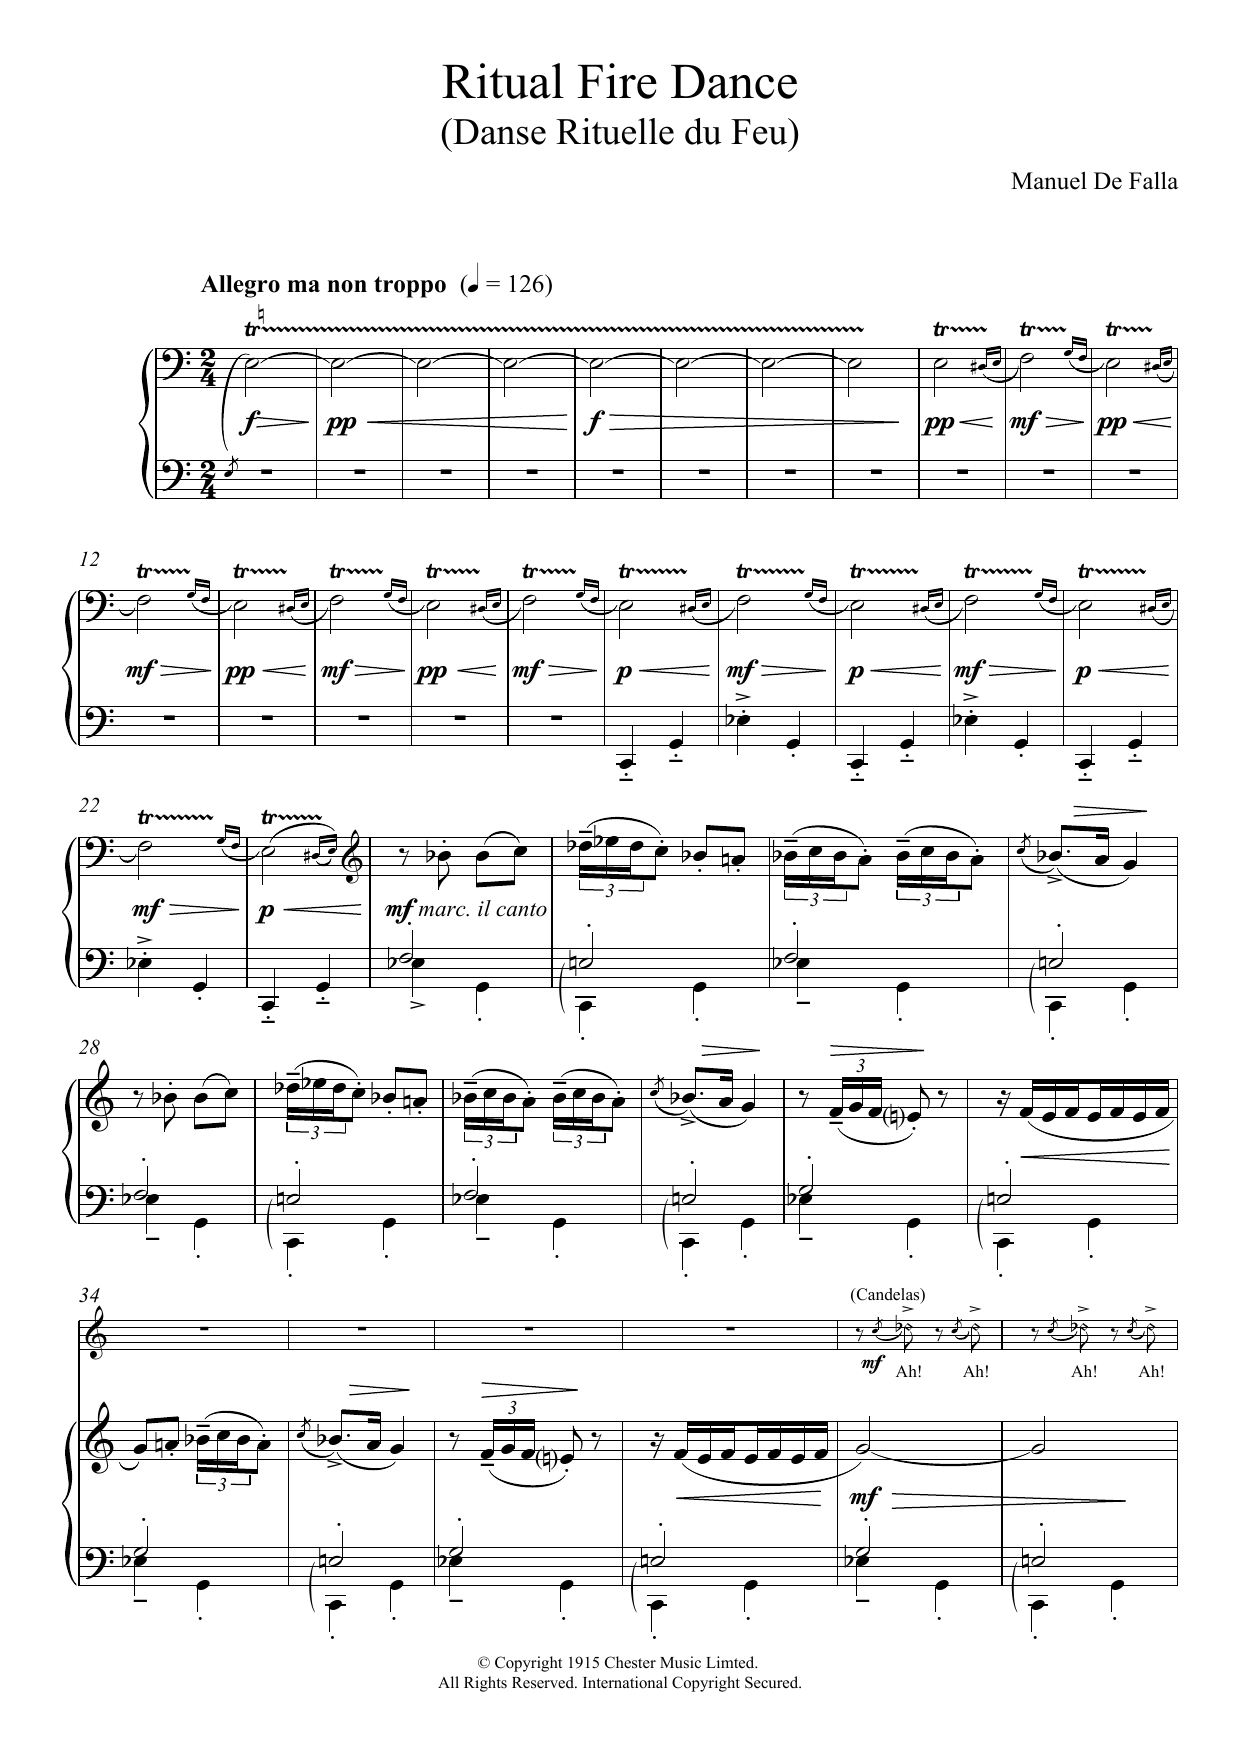 Manuel De Falla Ritual Fire Dance Sheet Music Notes & Chords for Piano - Download or Print PDF